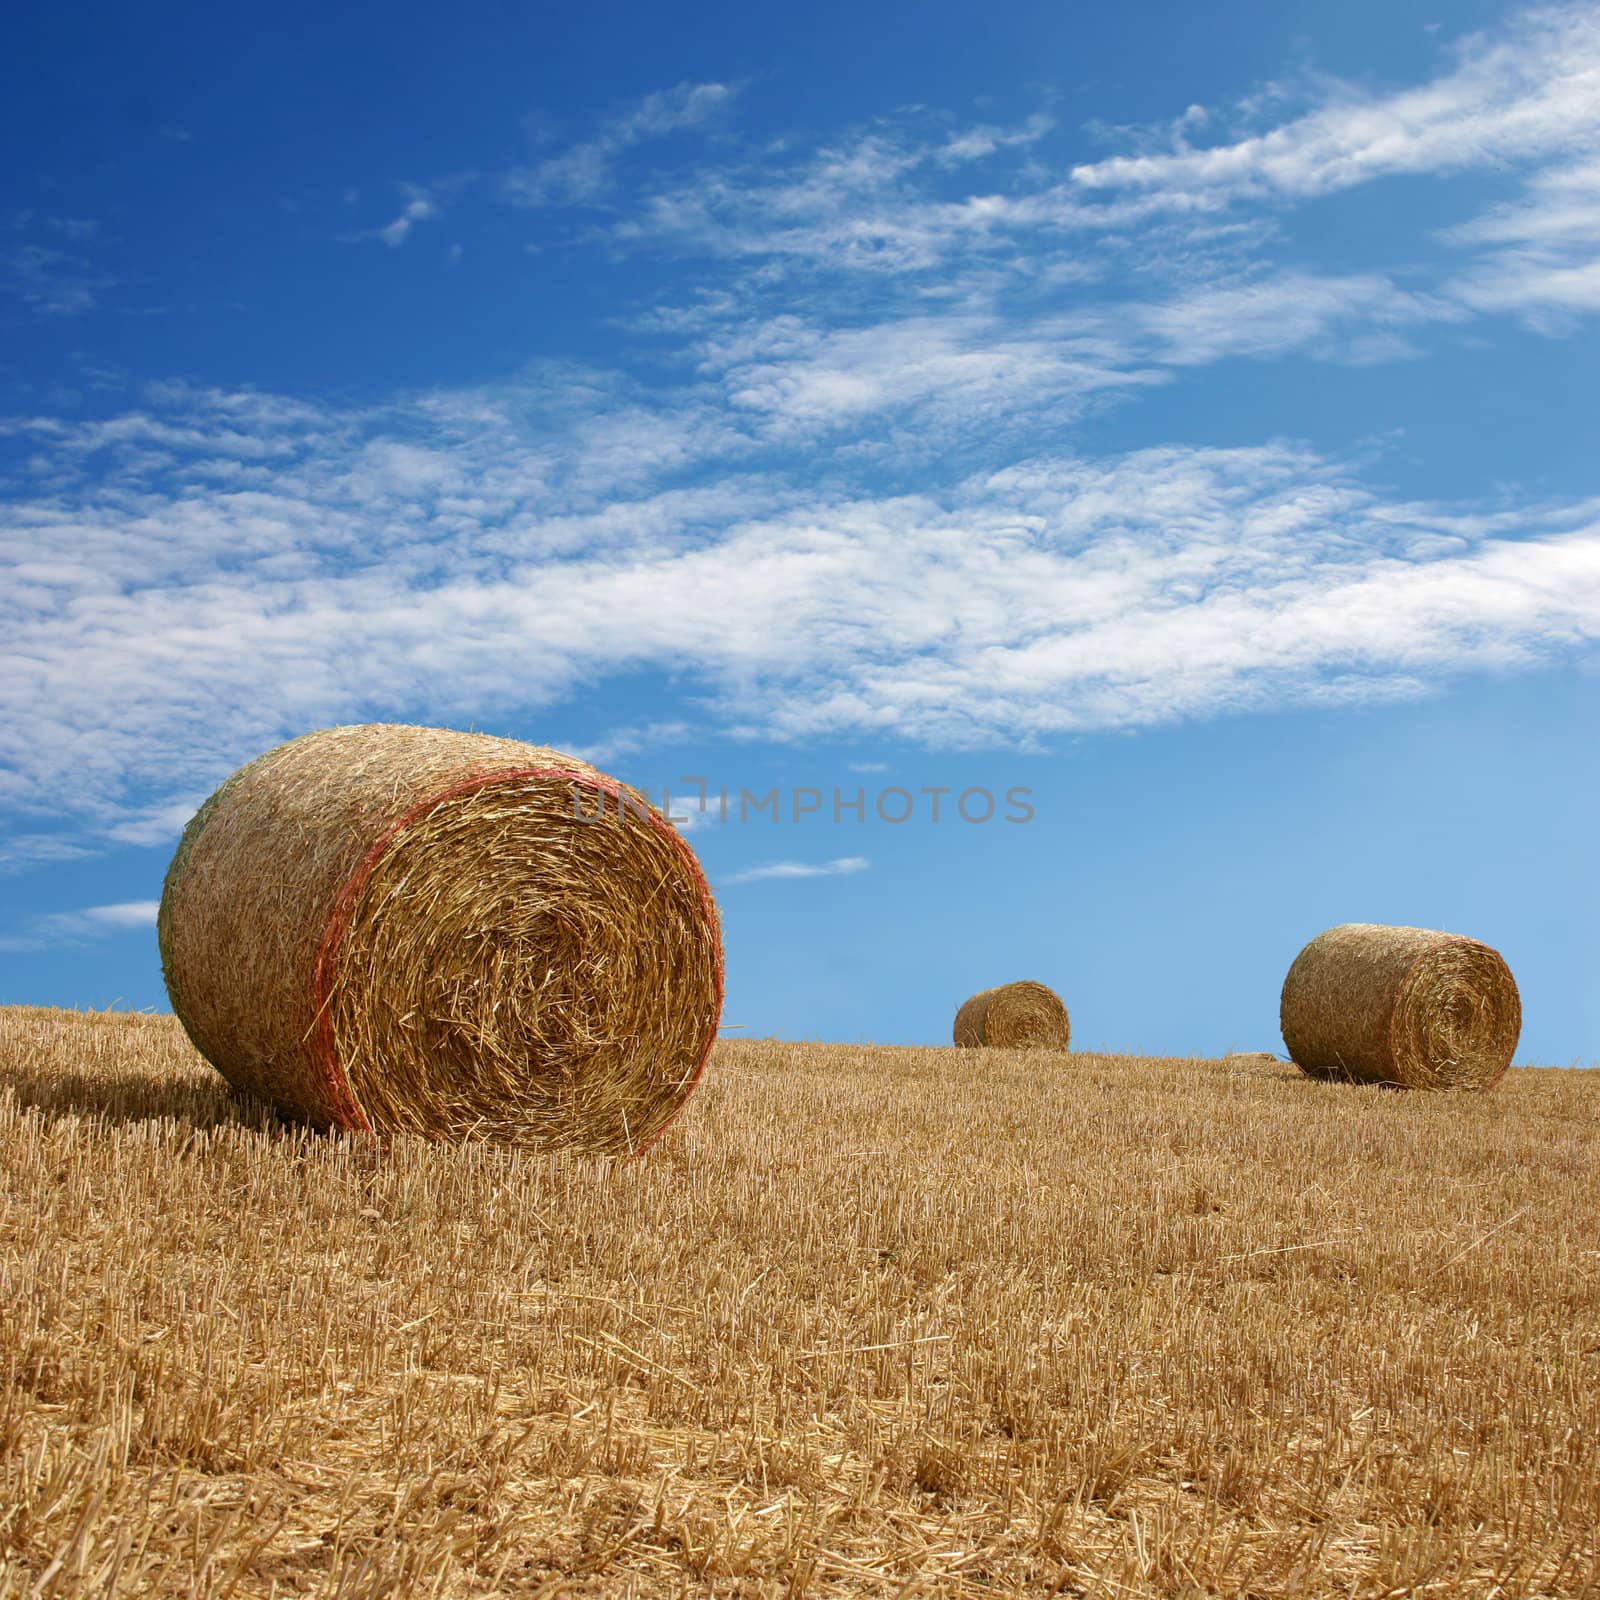 Straw Bales on Farmland with blue Sky